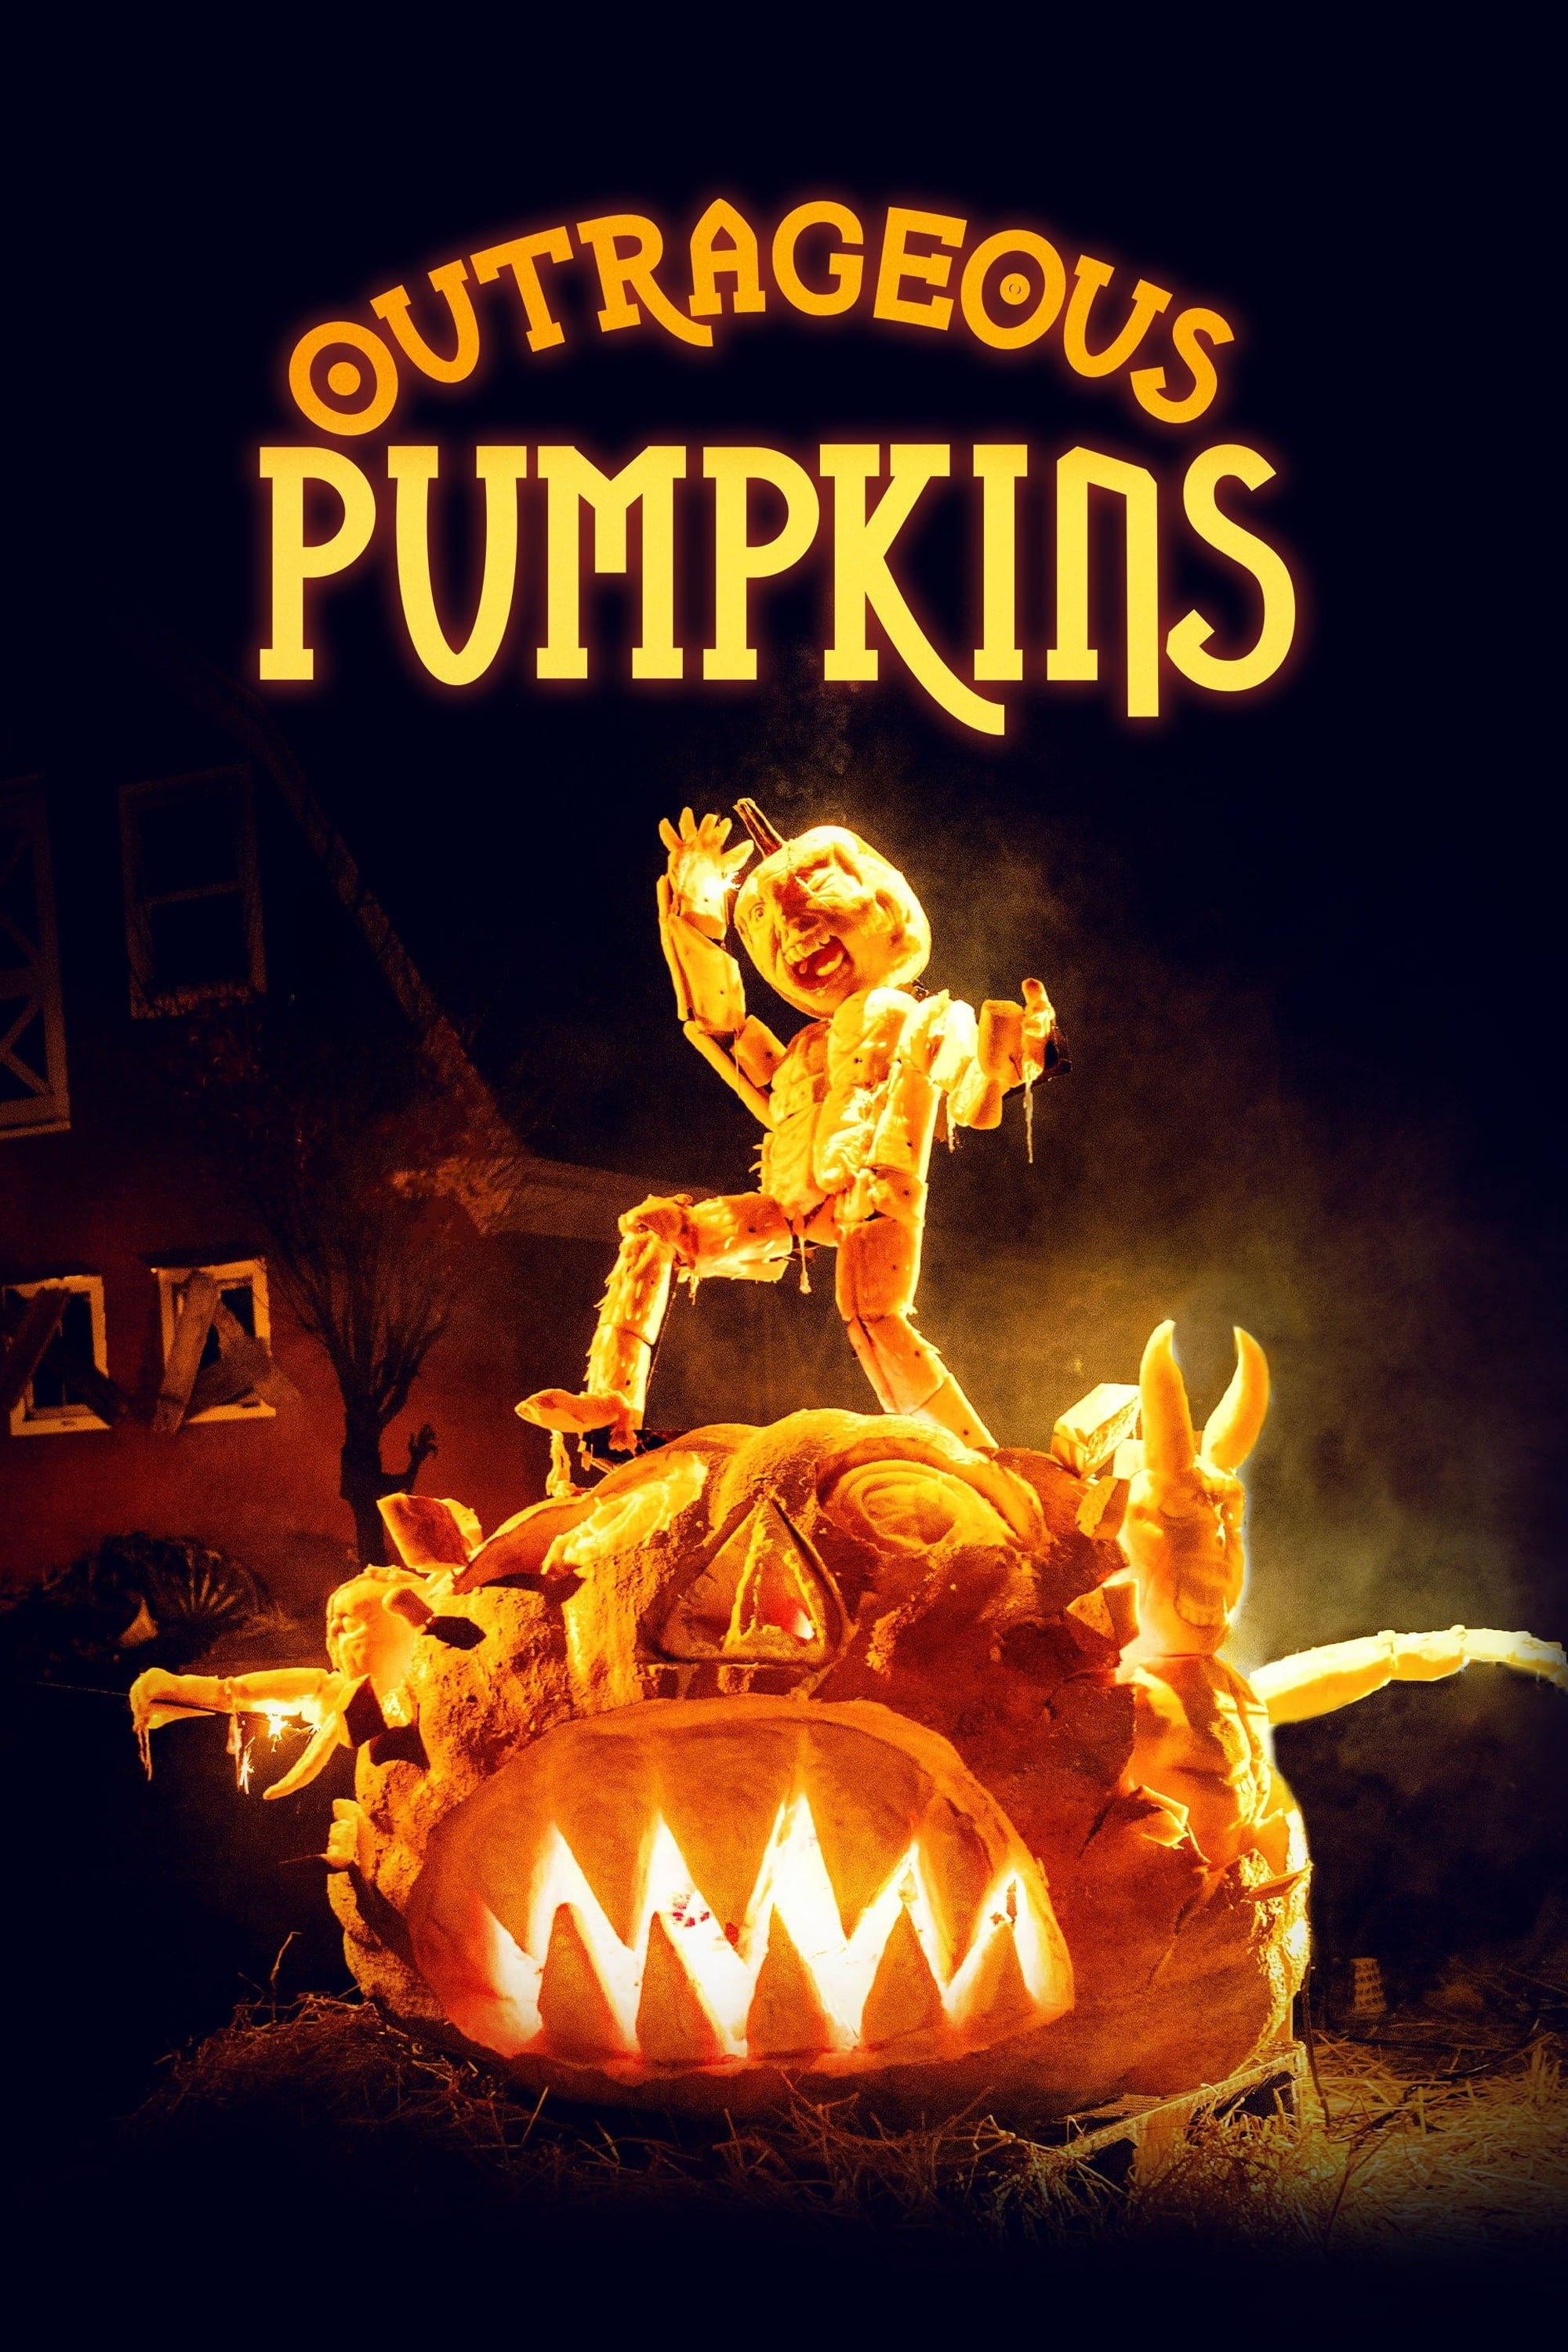 Outrageous Pumpkins TV Shows About Halloween